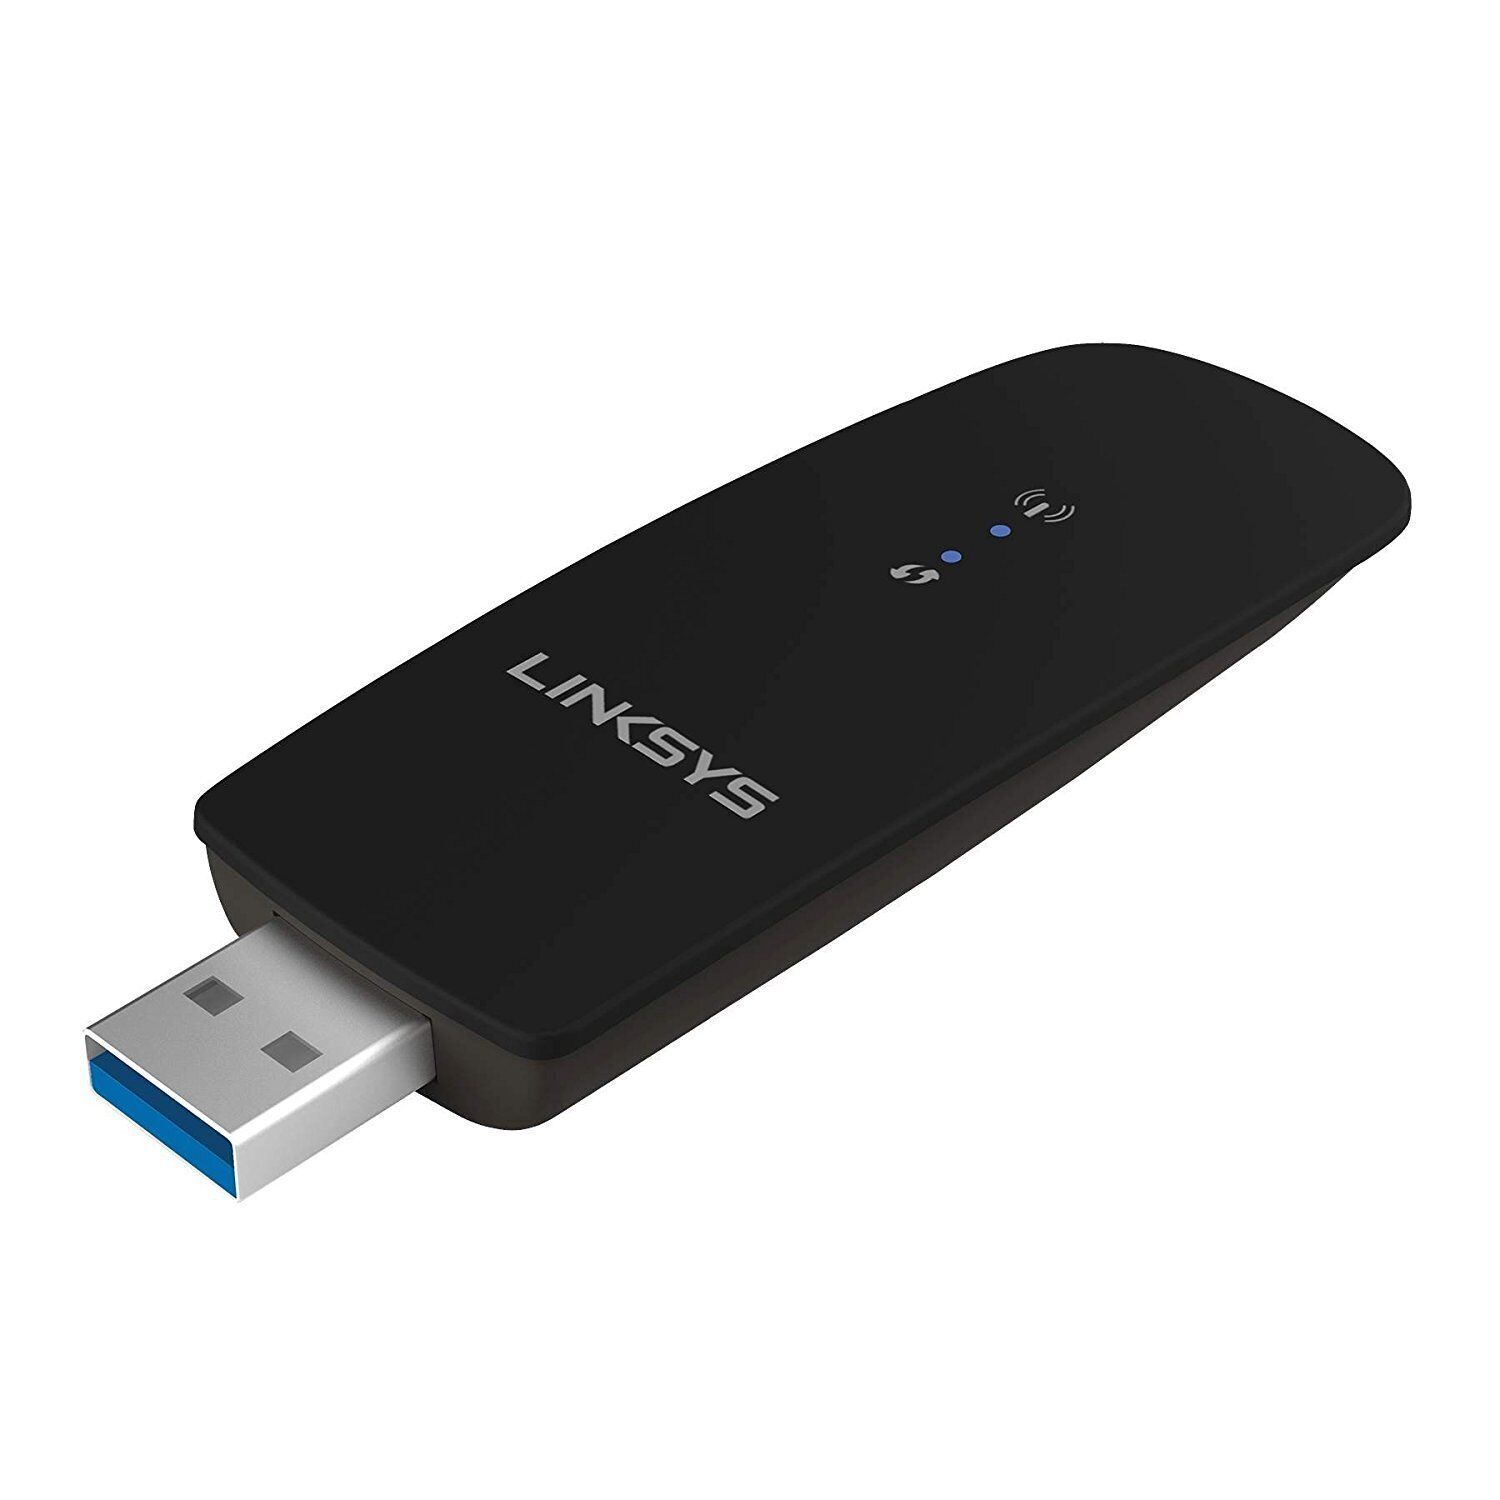 Linksys WUSB6300 Dual-Band AC1200 Wireless USB 3.0 Adapter Factory refurbished